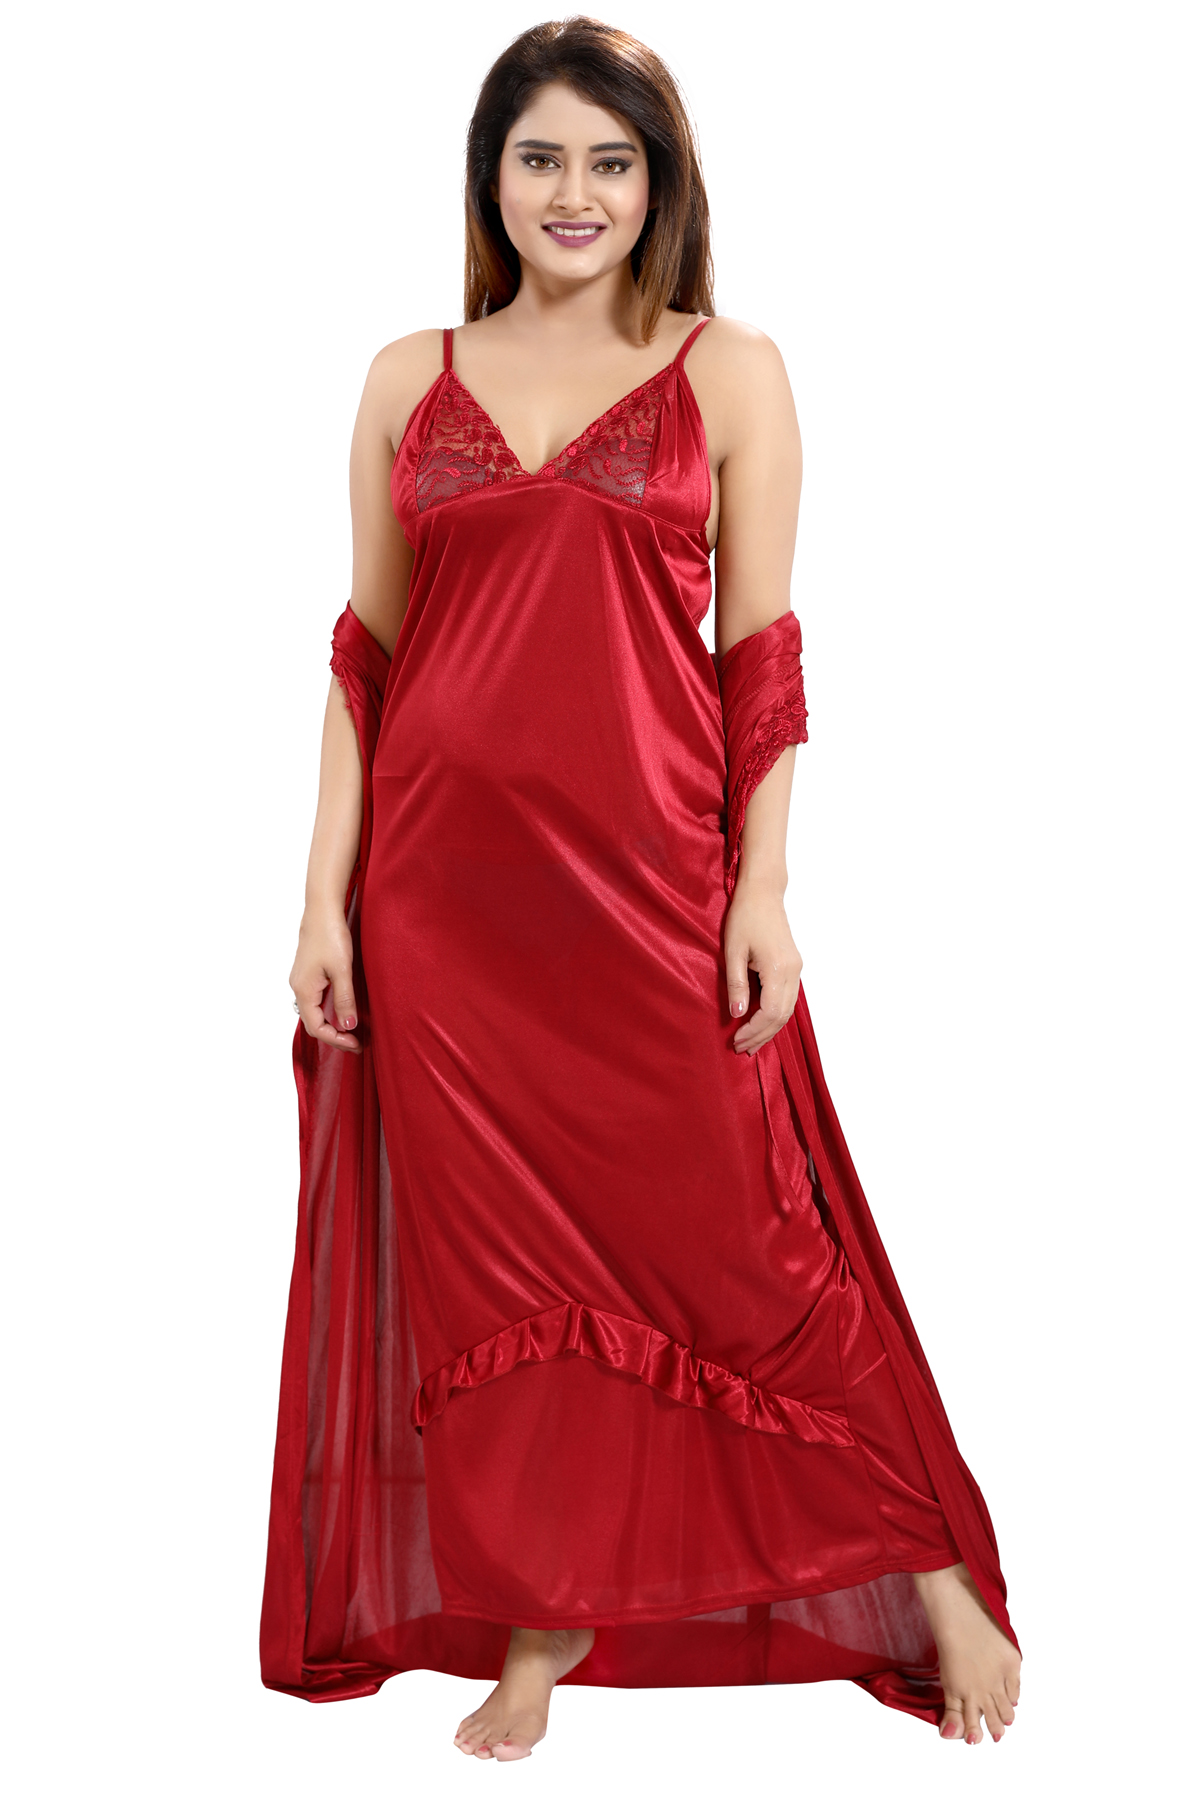 Buy Be You Maroon Solid Lace Satin Women Nightwear Set (1 Robe, 1 ...